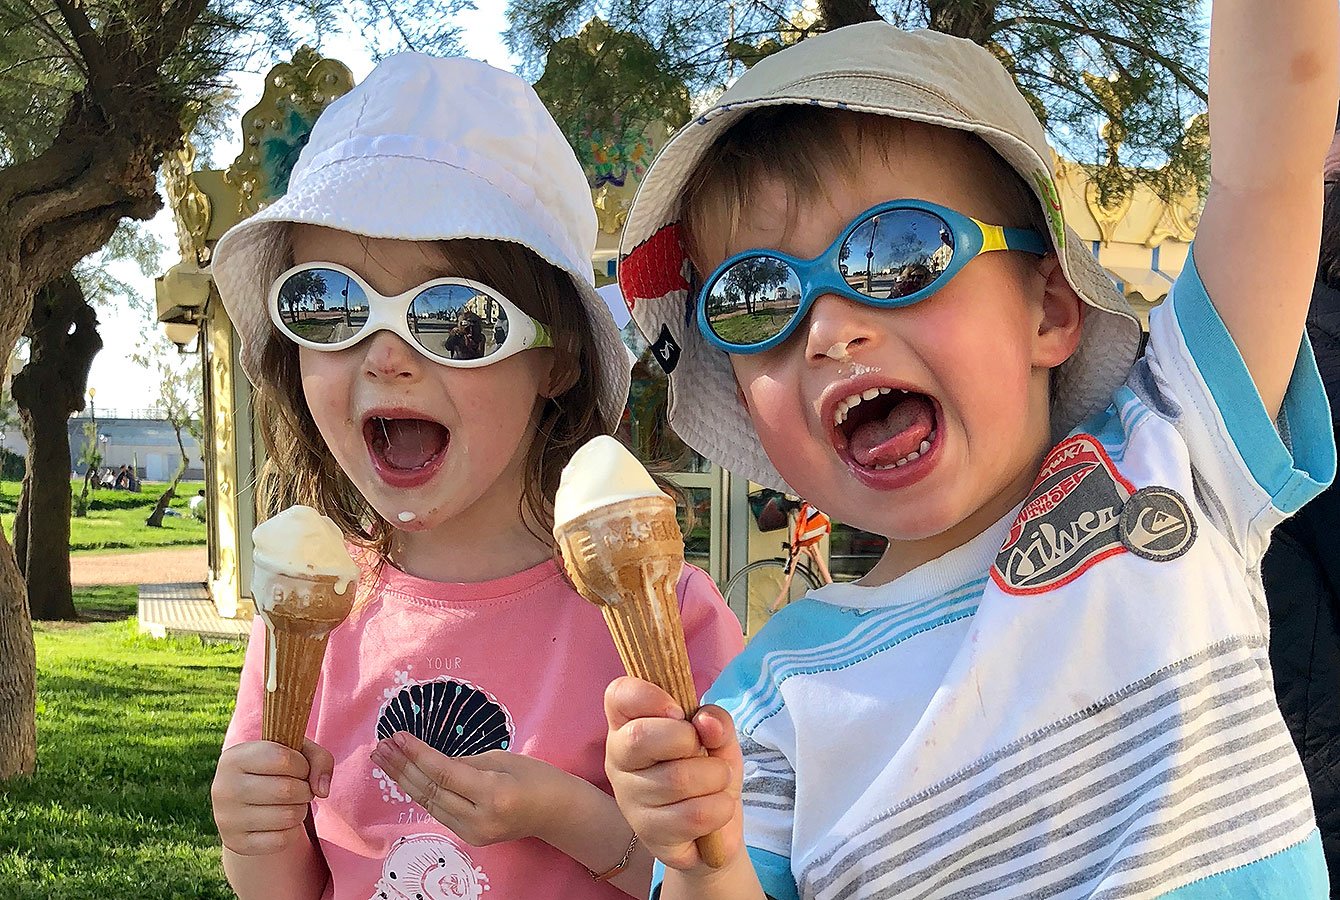 Kids eating Bonifacio Ice cream - the best - Corsica - France